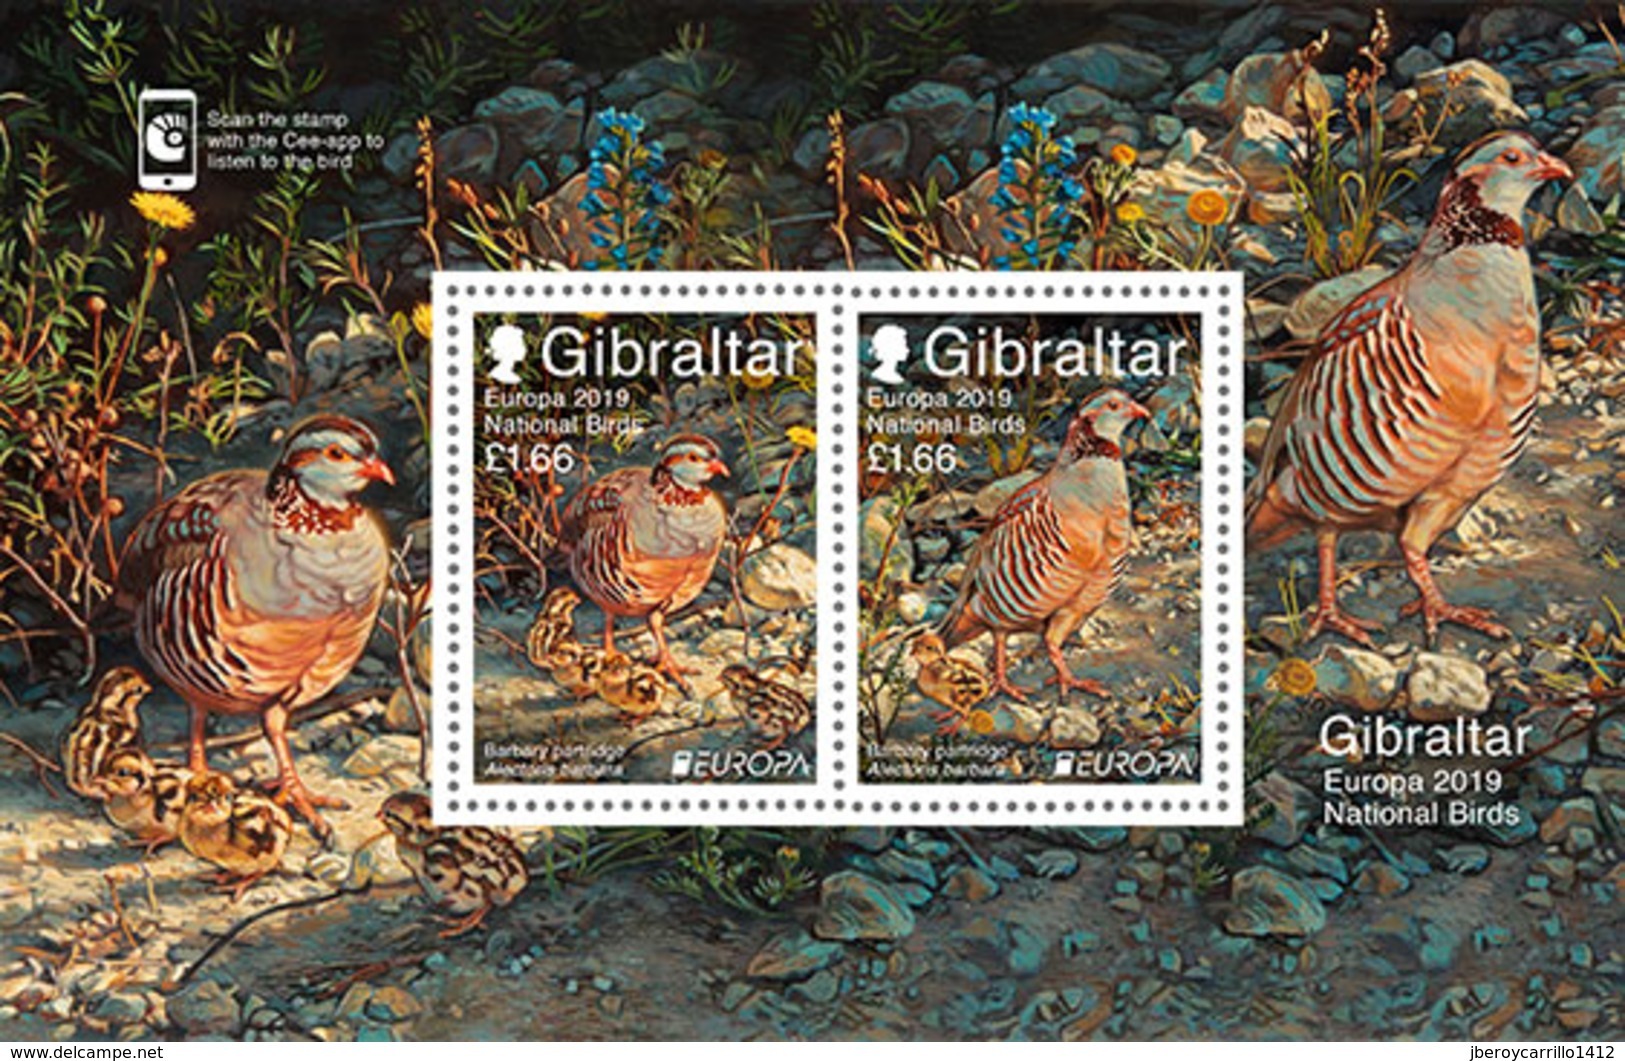 GIBRALTAR 2019 - EUROPA 2019 - -"AVES - BIRDS/WILDLIFE - VÖGEL - OISEAUX"- BARBARY PARTRIDGE  - SOUVENIR SHEET - Gallináceos & Faisanes